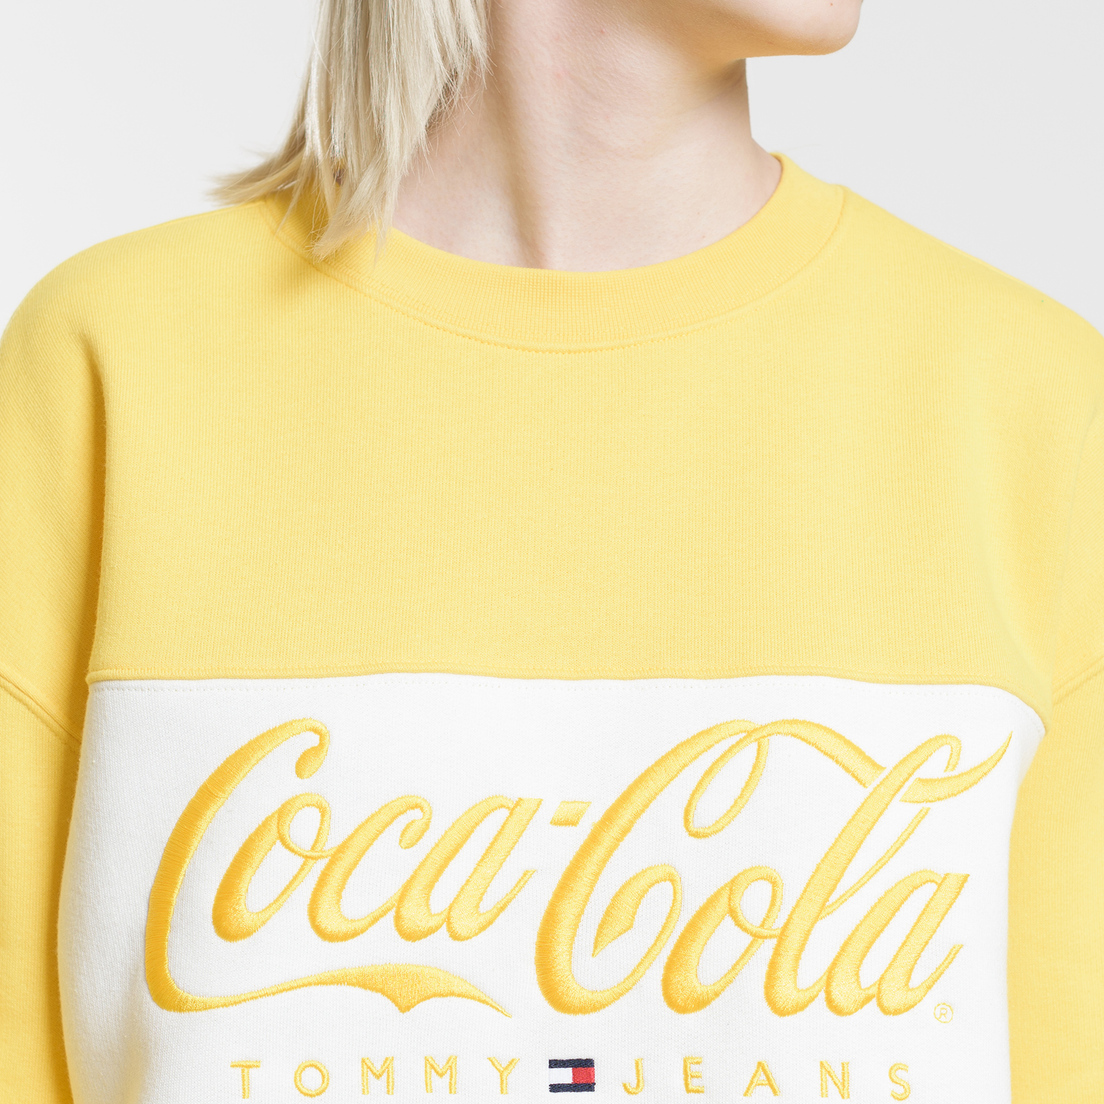 Tommy Jeans Женская толстовка x Coca-Cola Logo Crew